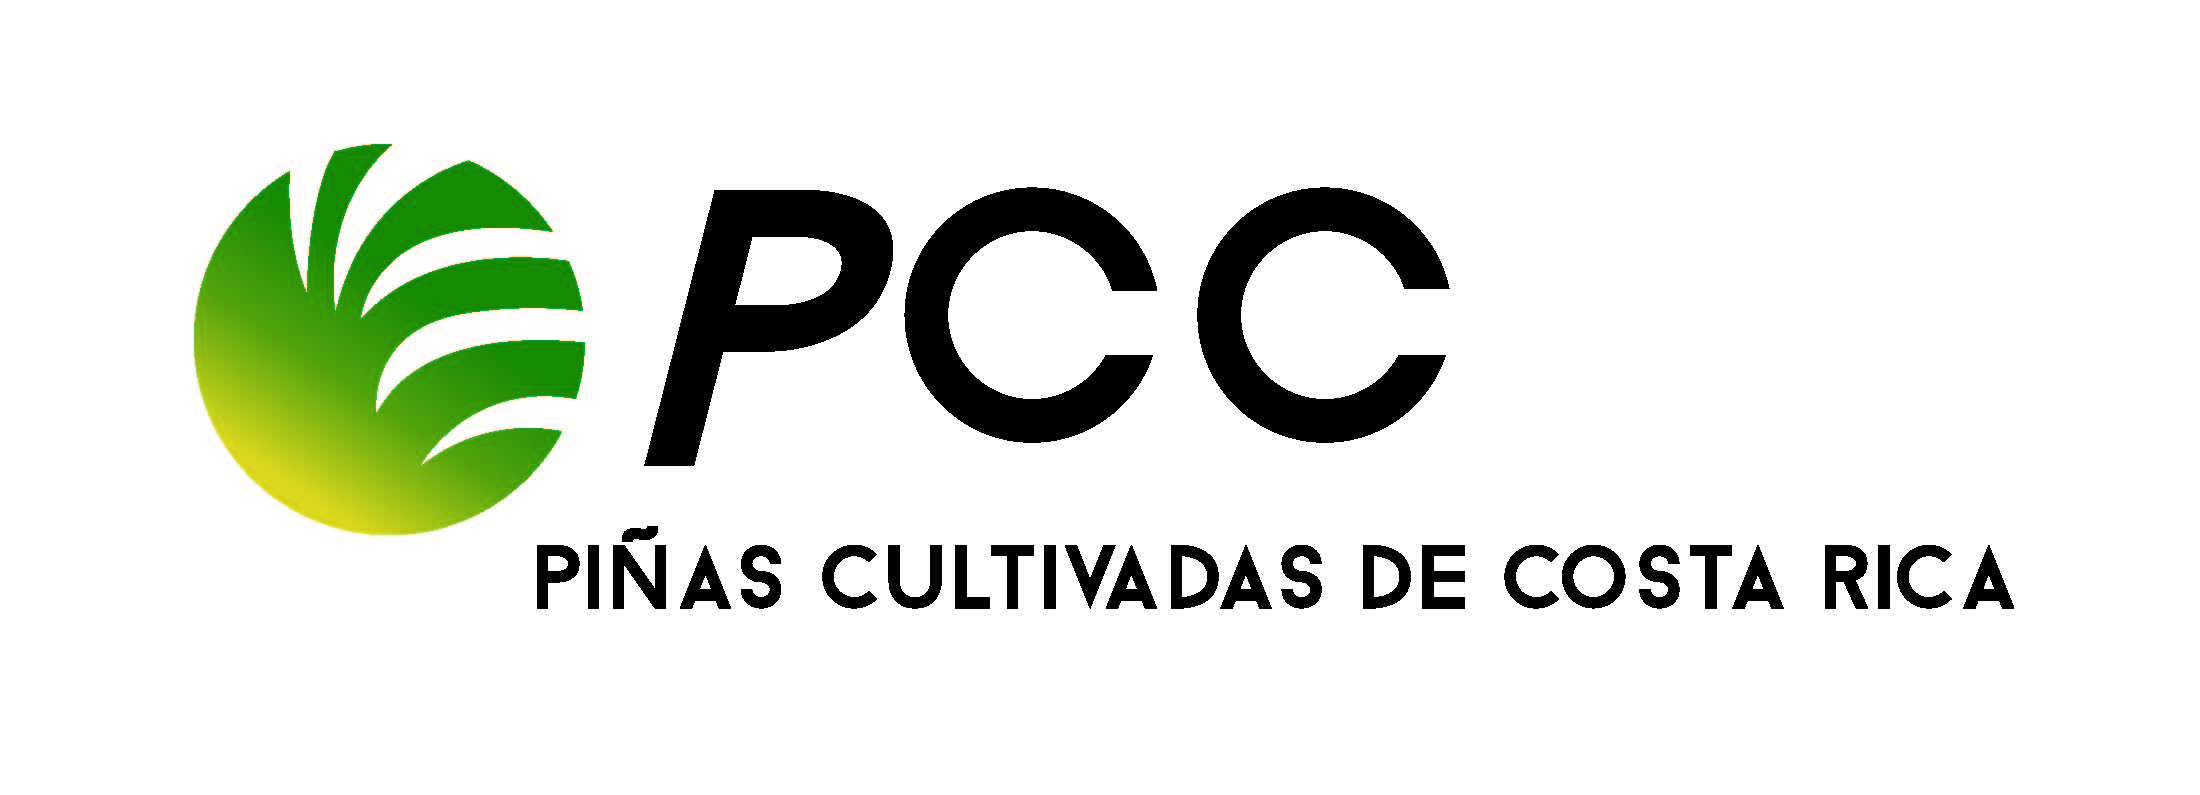 Logo PCC Alta_Página_2